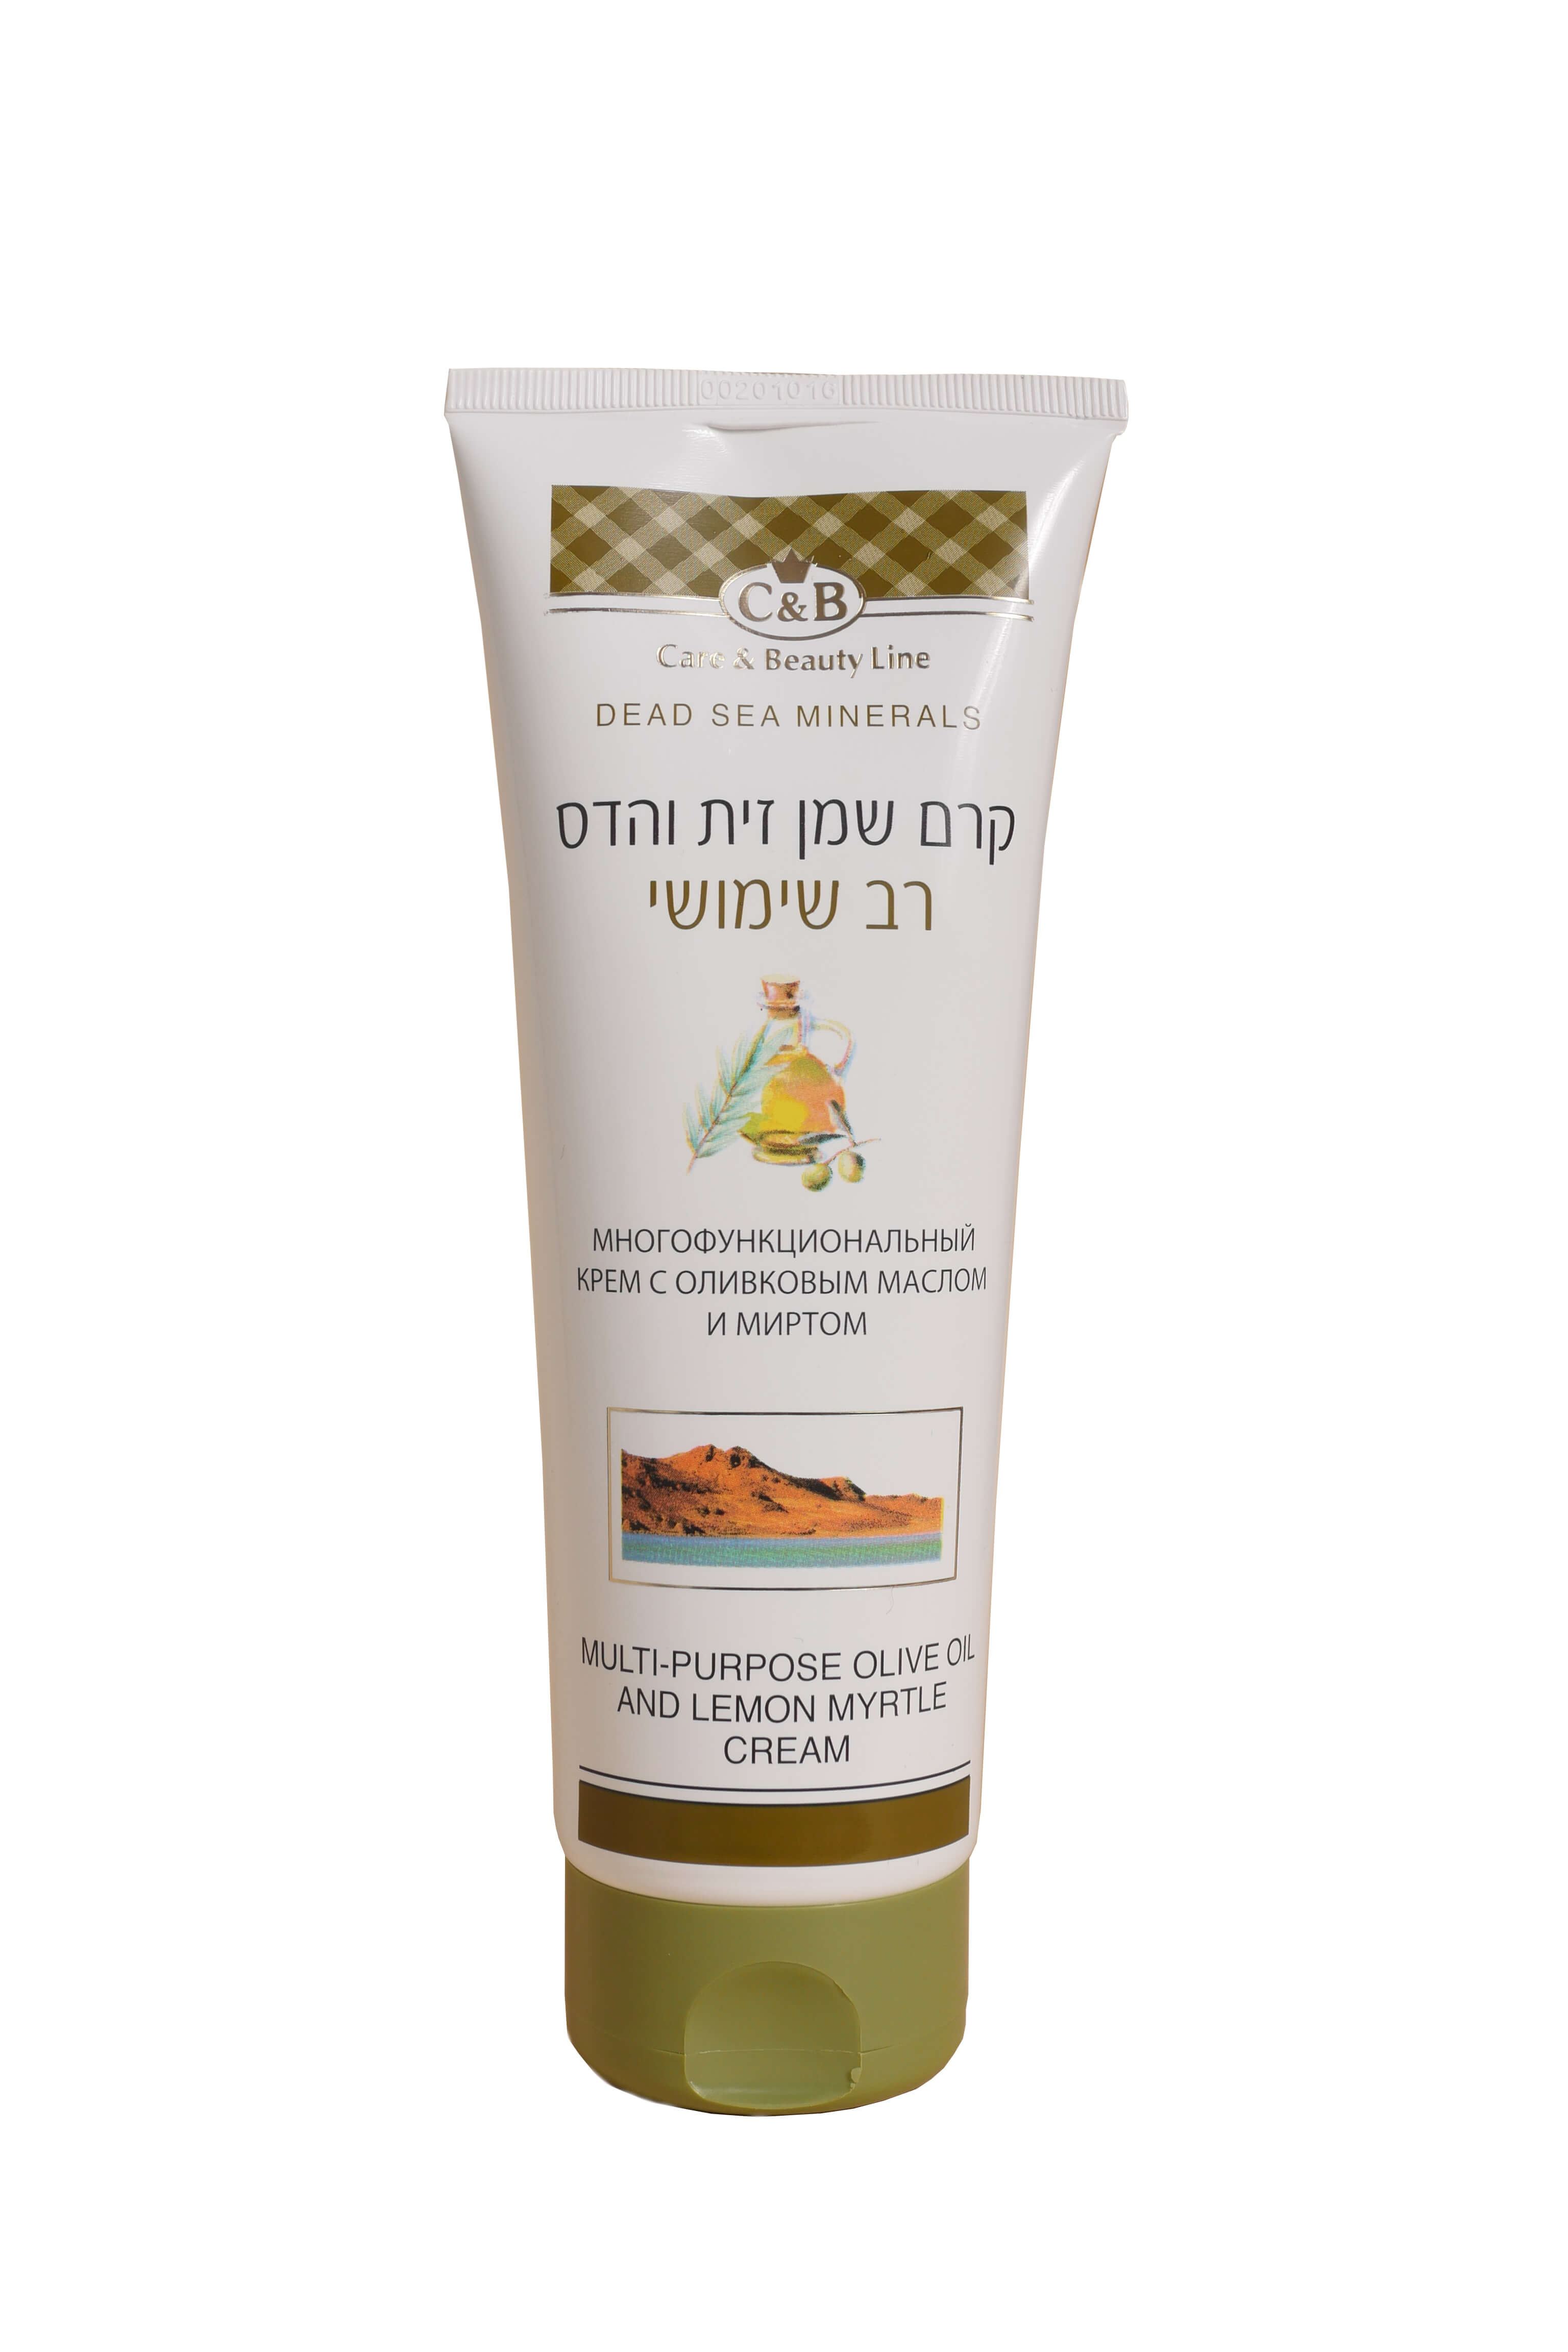  Multi-purpose cream with olive oil 250 ml